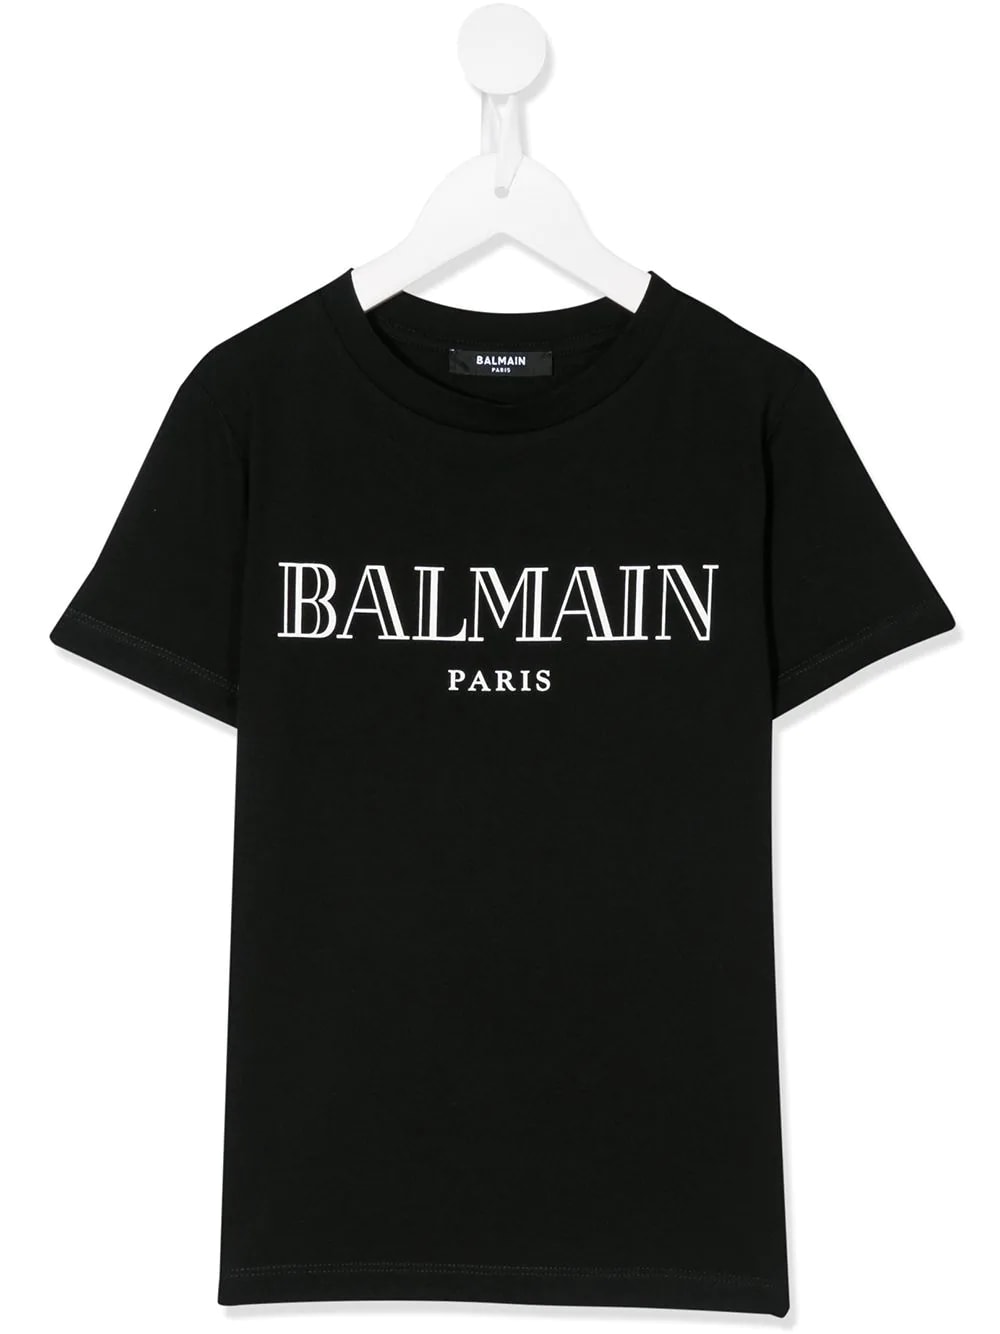 Balmain Unisex Kid Black T-shirt With White Logo